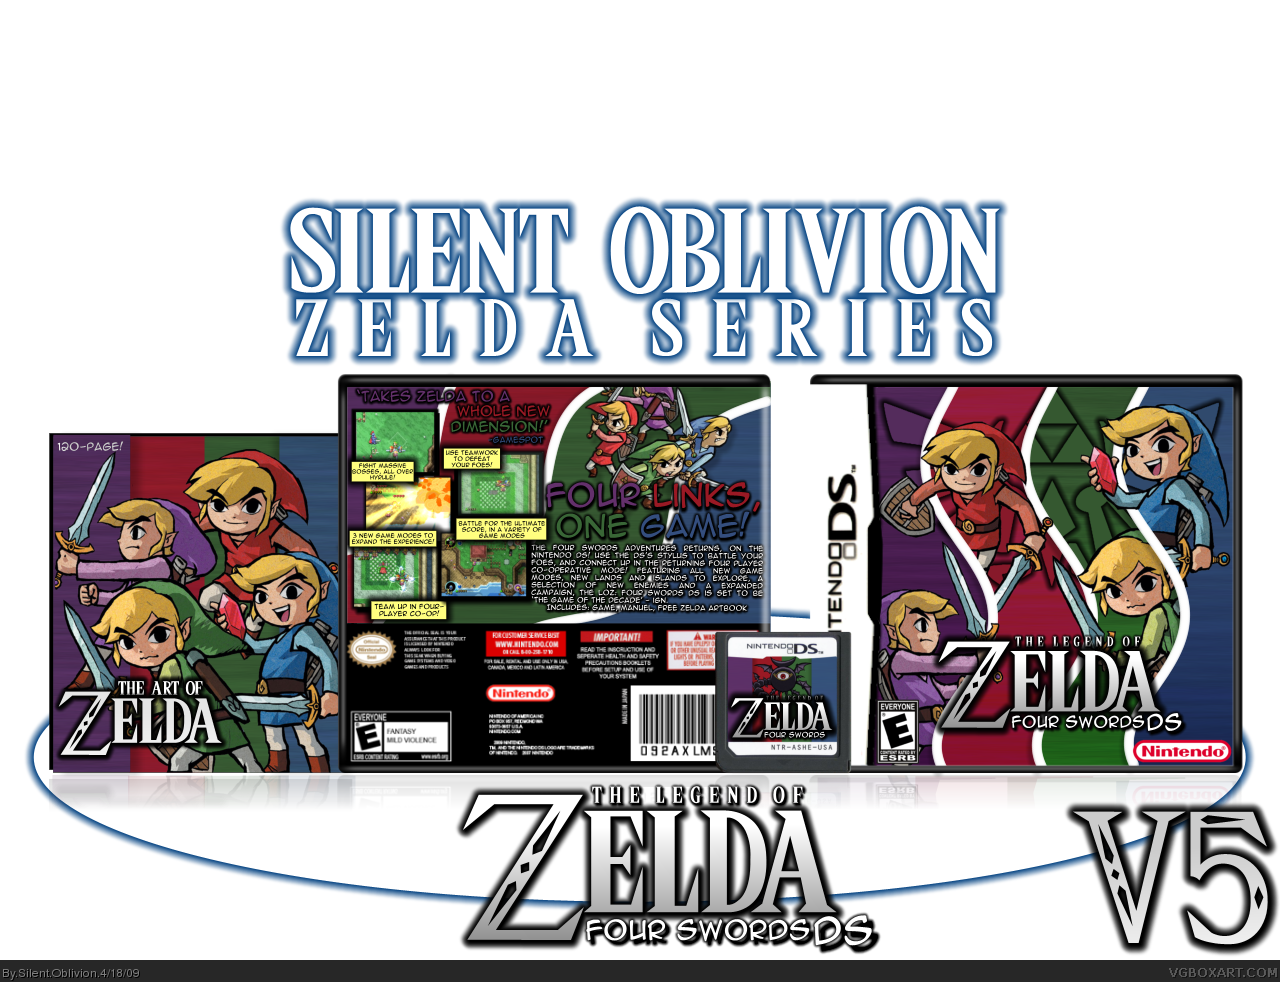 The Legend of Zelda: Four Swords Adventures box cover